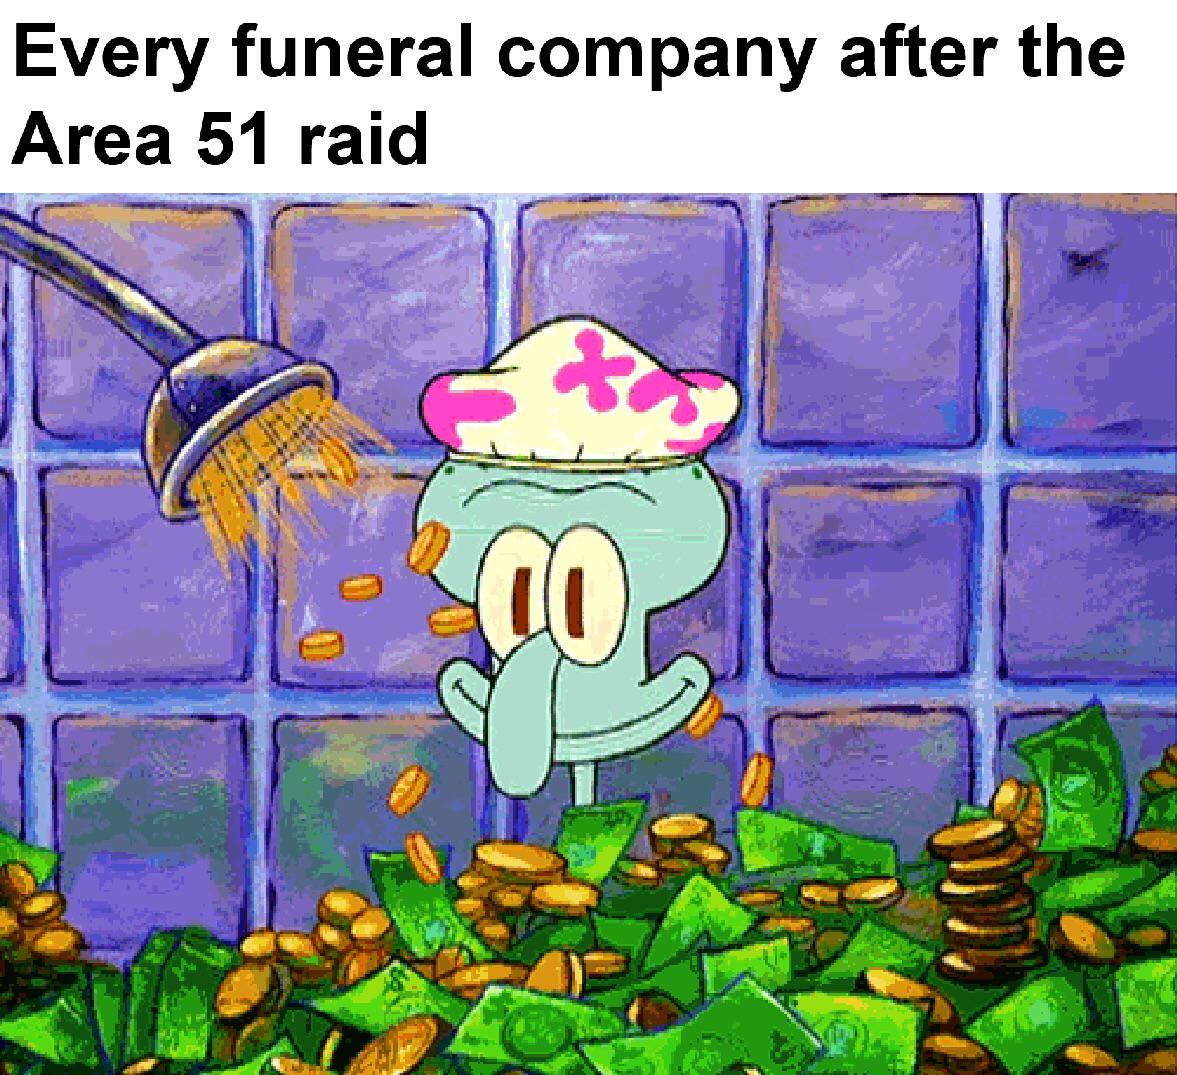 spongebob spongebob-memes spongebob text: Every funeral company after the Area 51 raid 